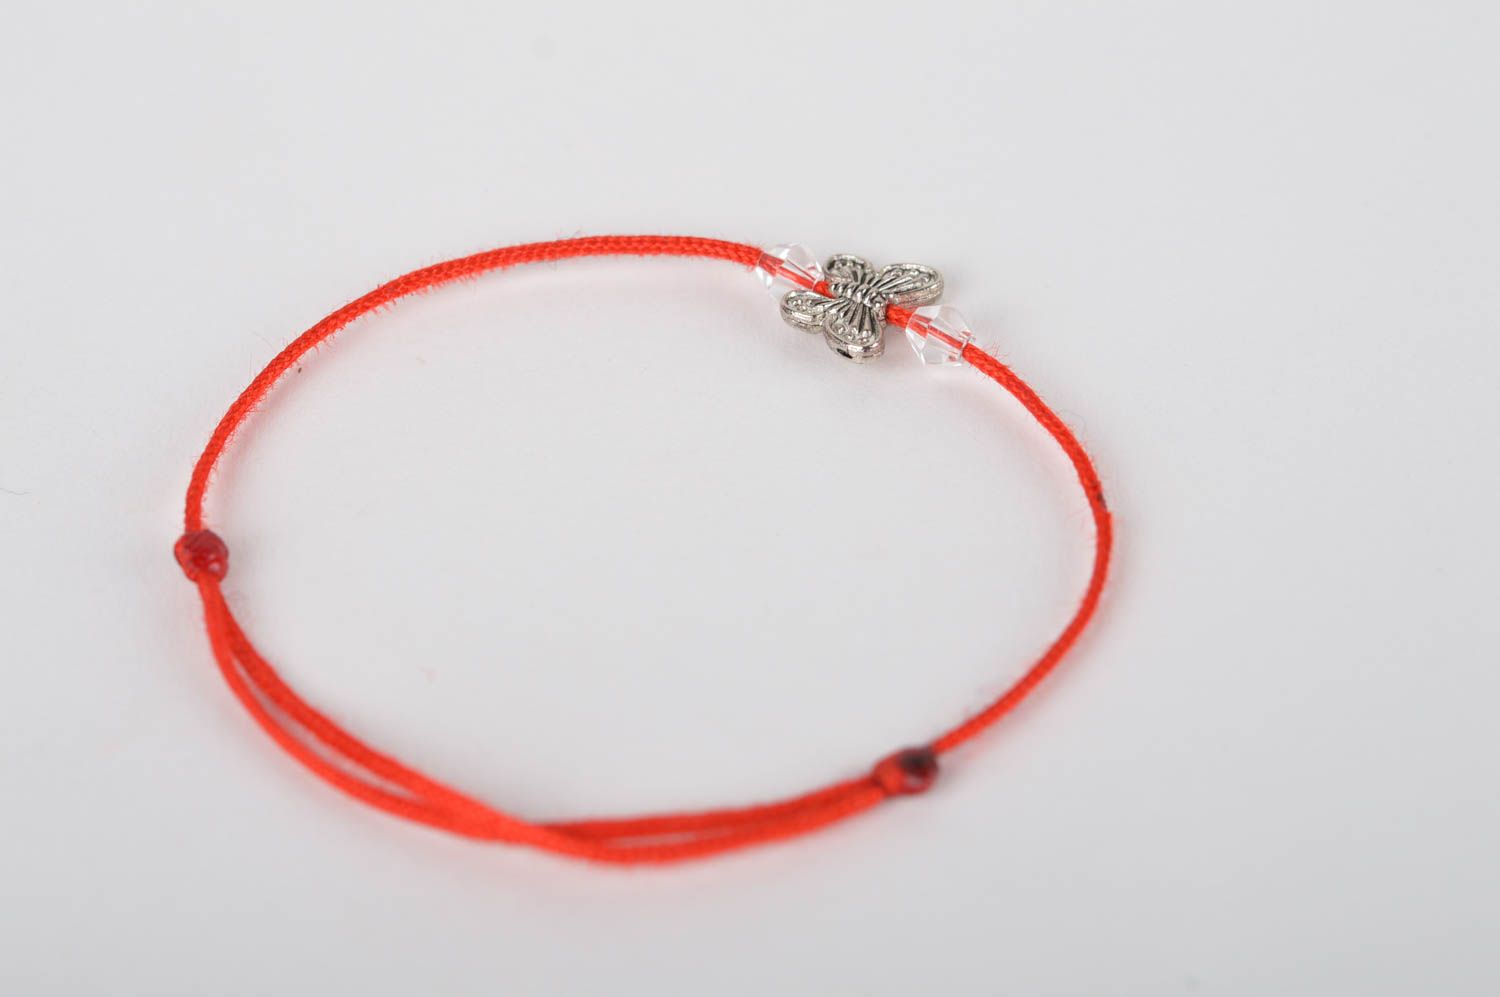 Handmade string bracelet textile wrist bracelet designs artisan jewelry photo 5